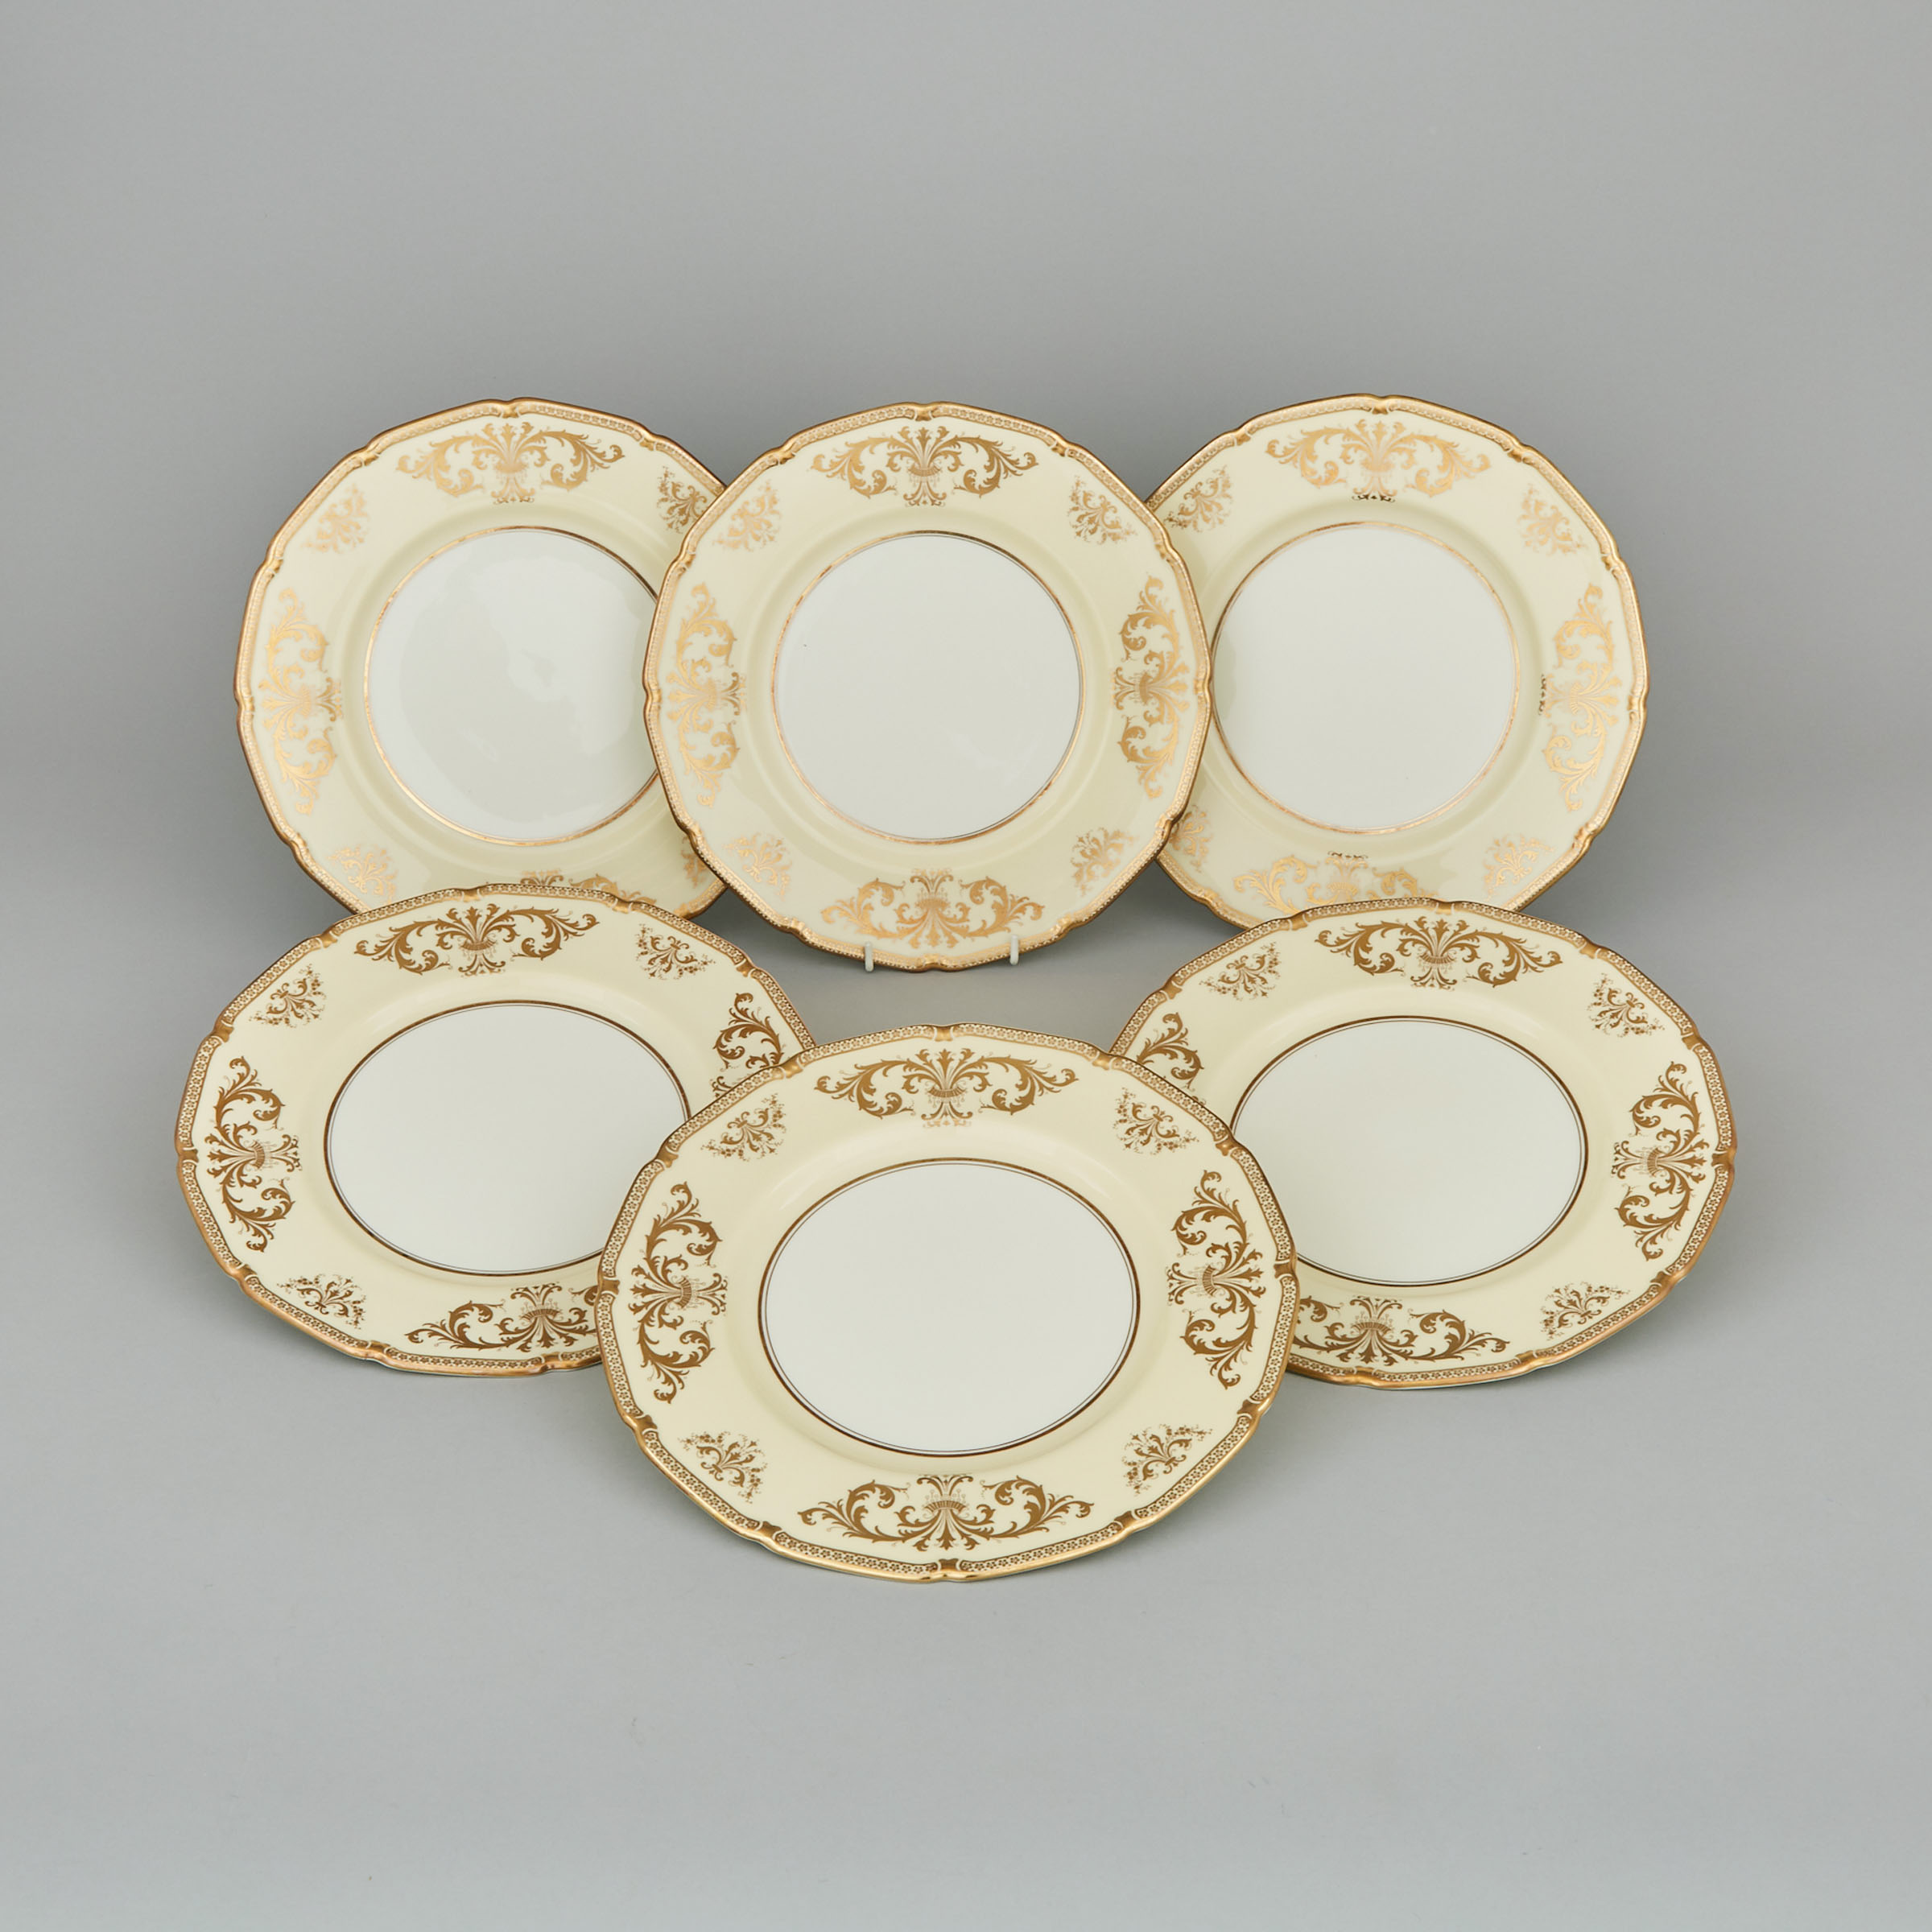 Six Royal Doulton Service Plates, 20th century